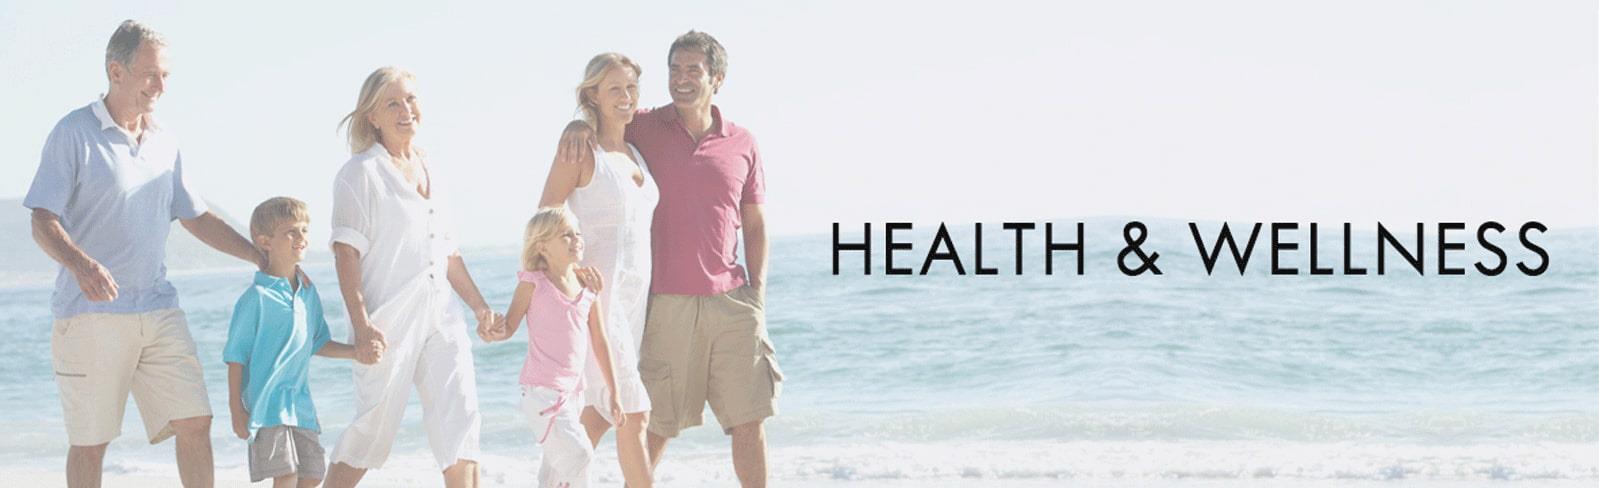 Hpfy Health & Wellness